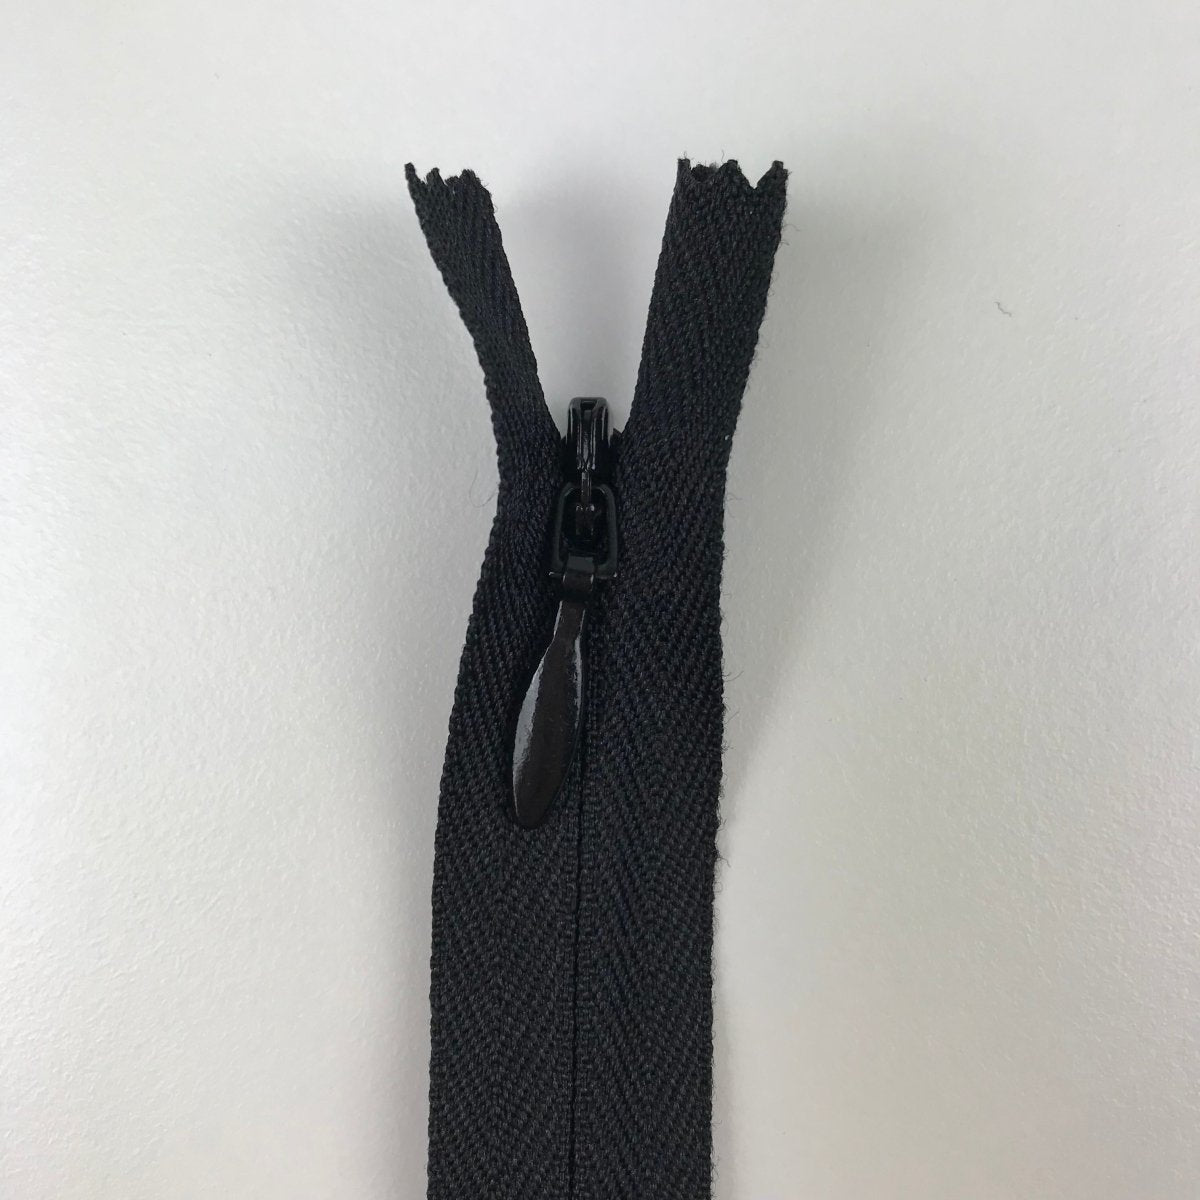 YKK Zipper - Invisible - 23cm (9") - Sewing Gem